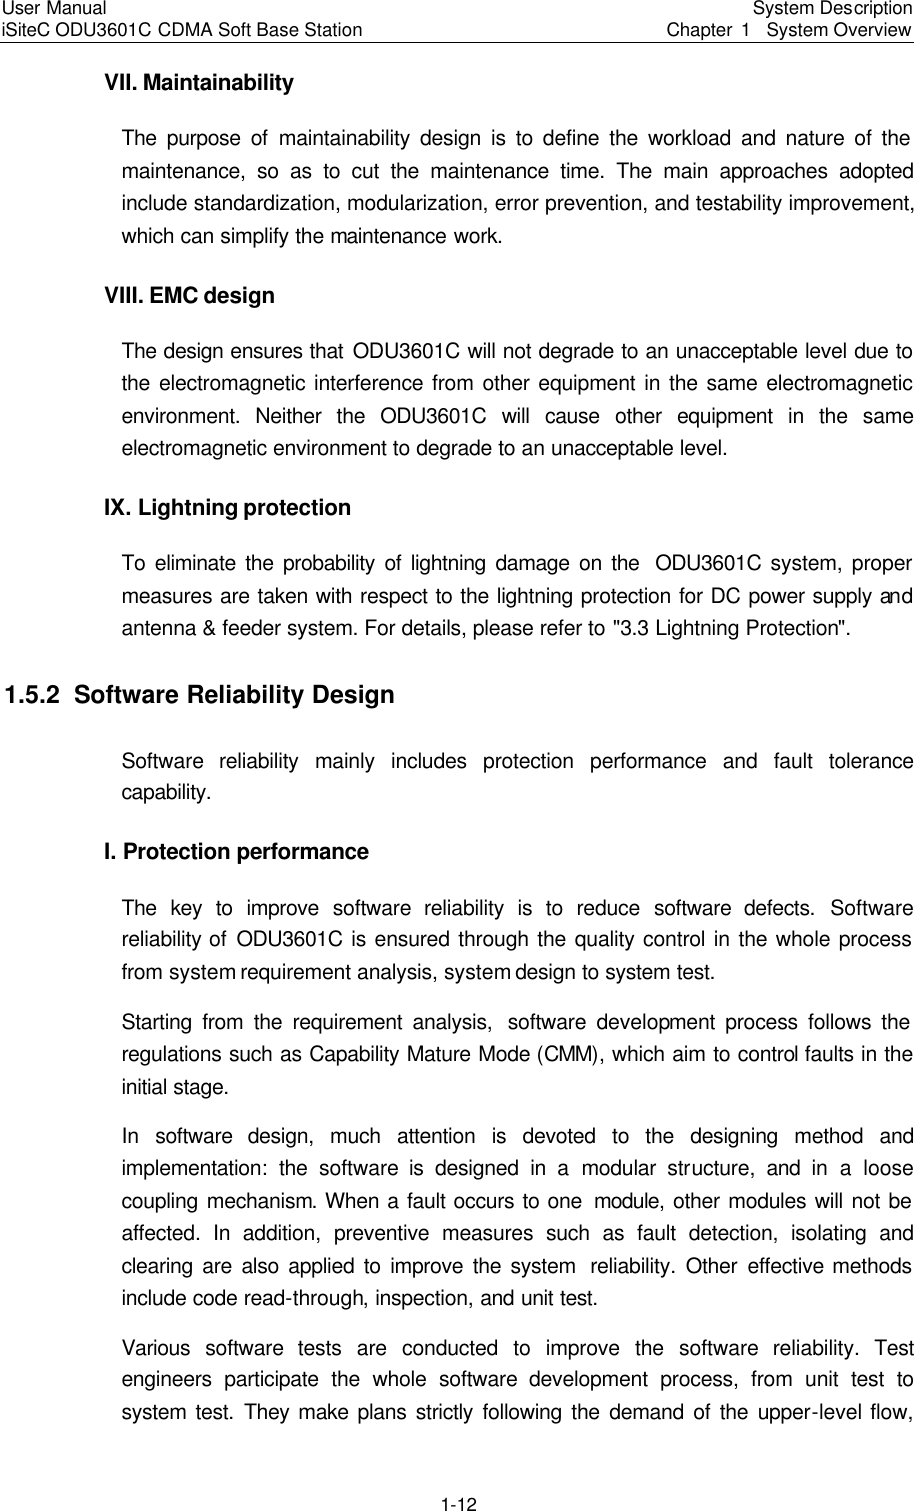 Page 15 of Huawei Technologies ODU3601C-800 CDMA Base Station User Manual 2